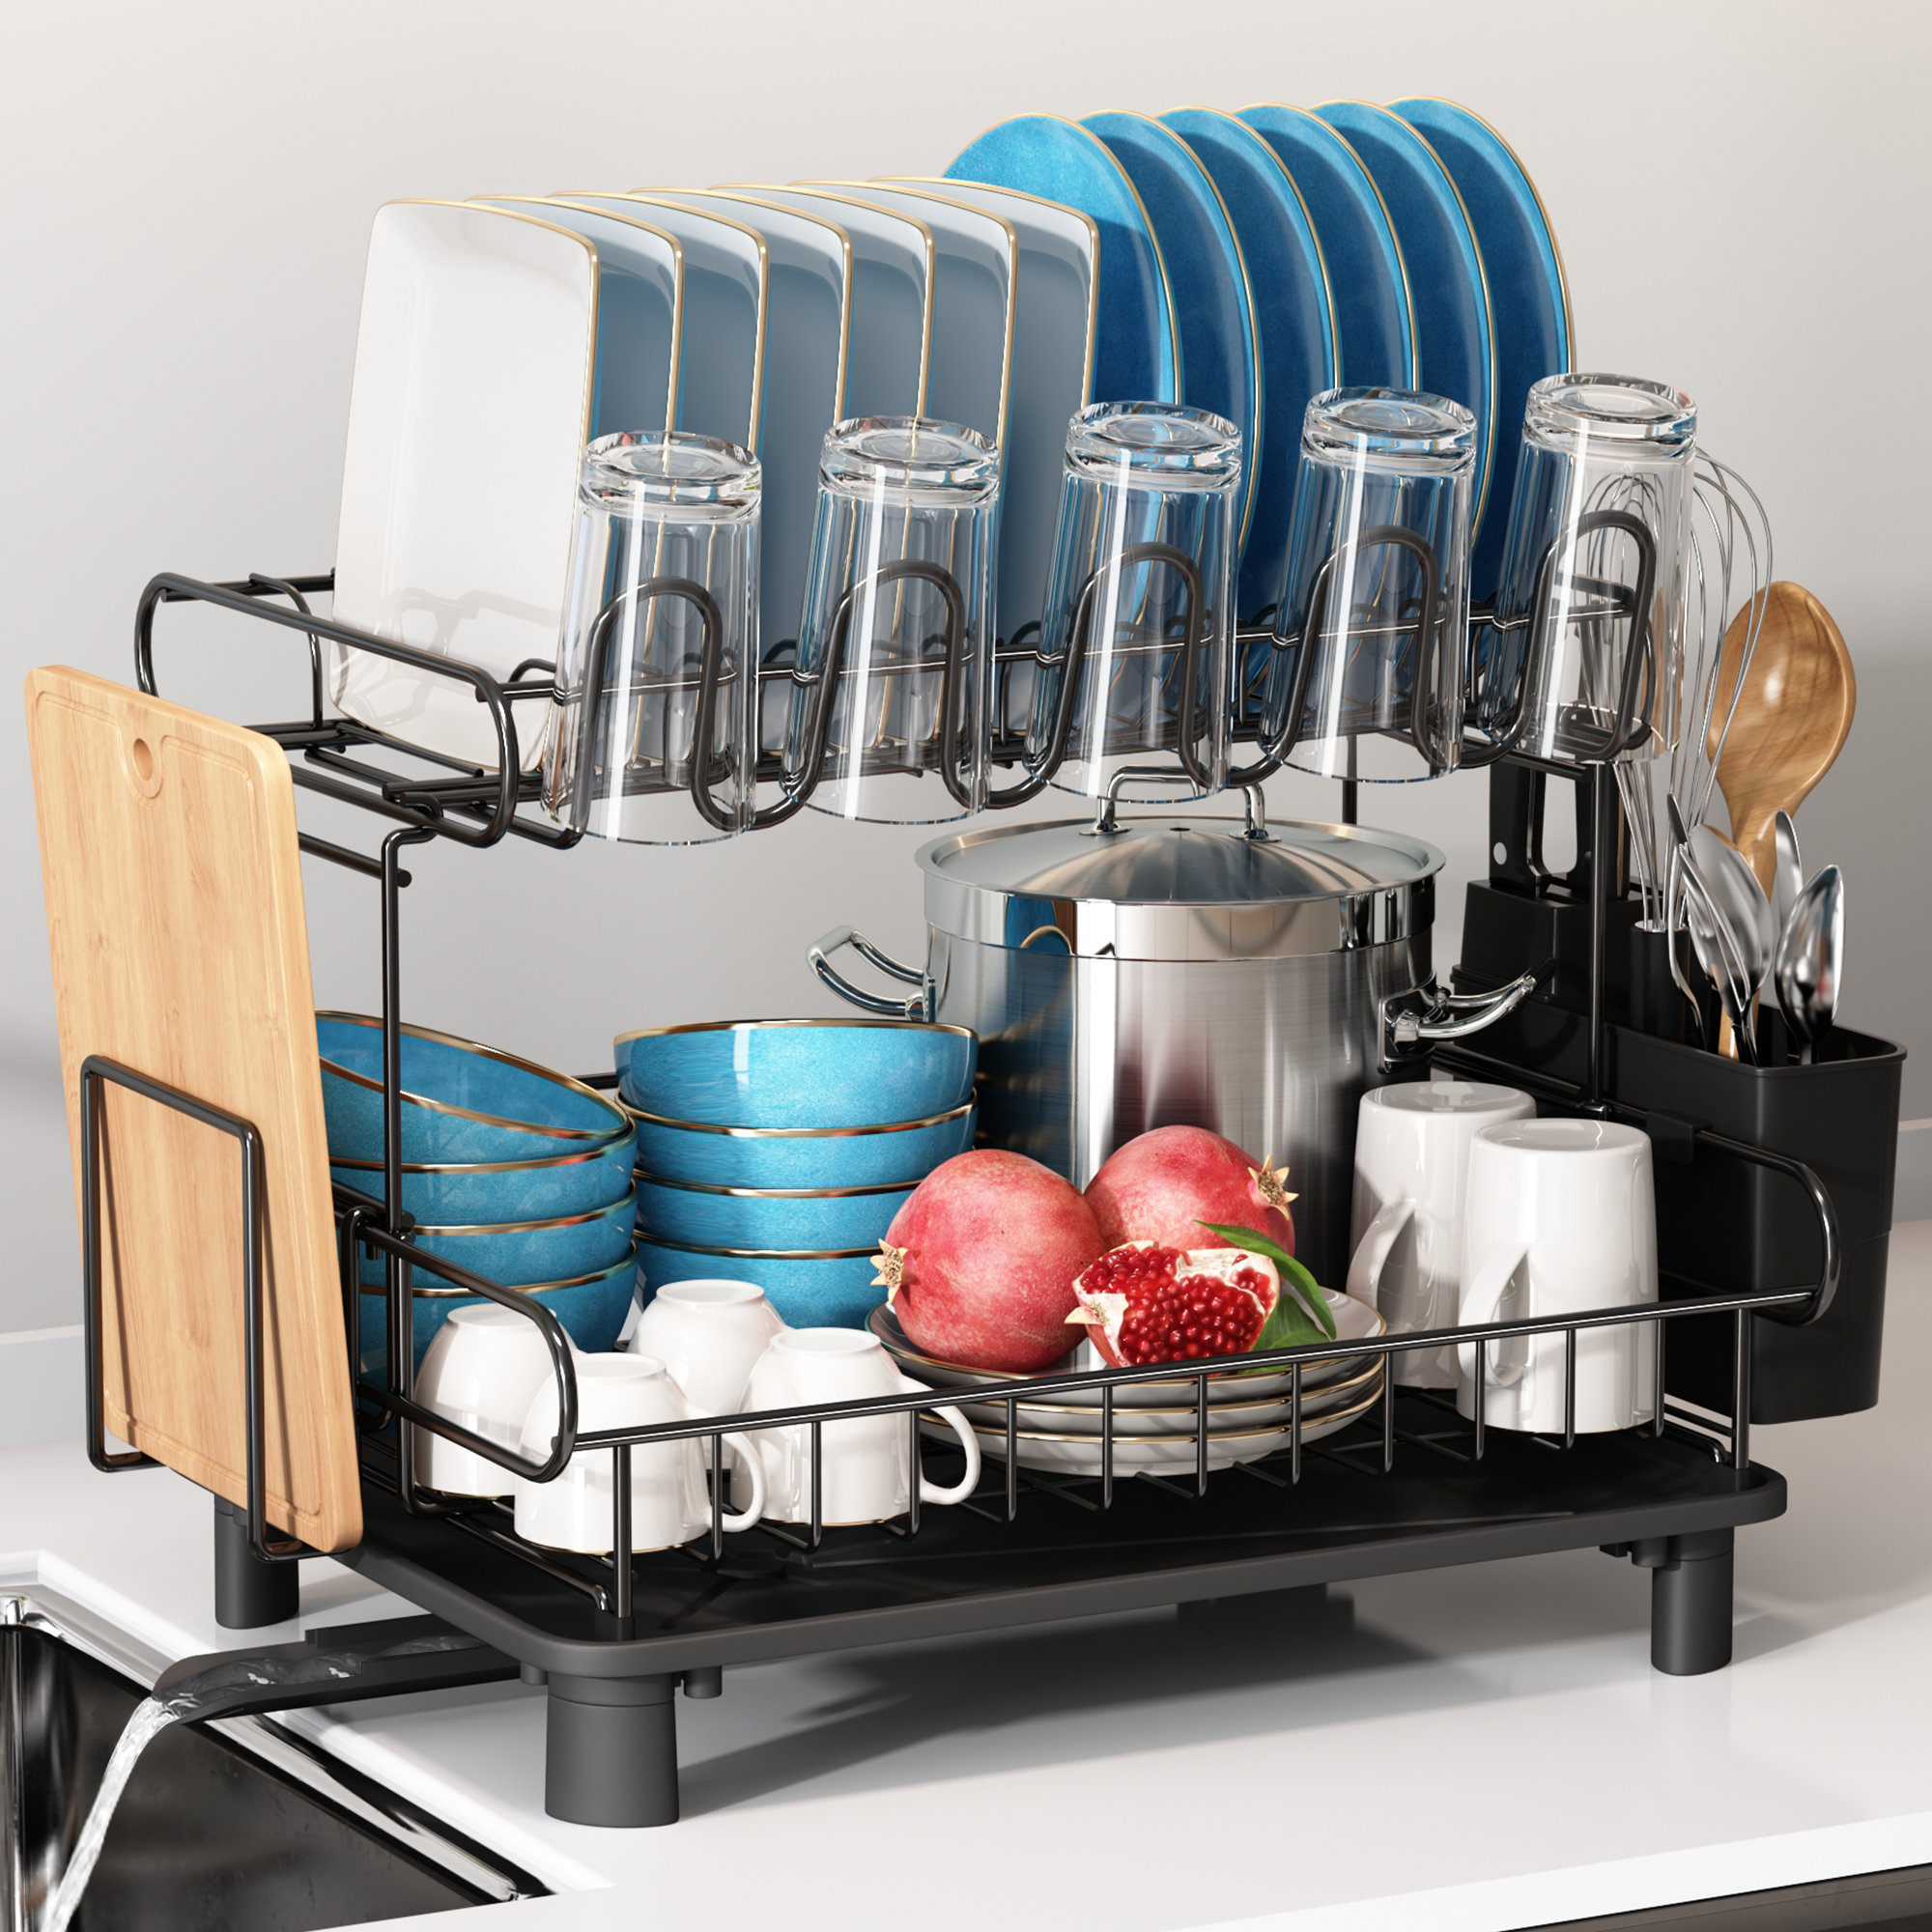 MAJALiS Dish Drying Rack, Dish Racks for Kitchen Counter, Dish